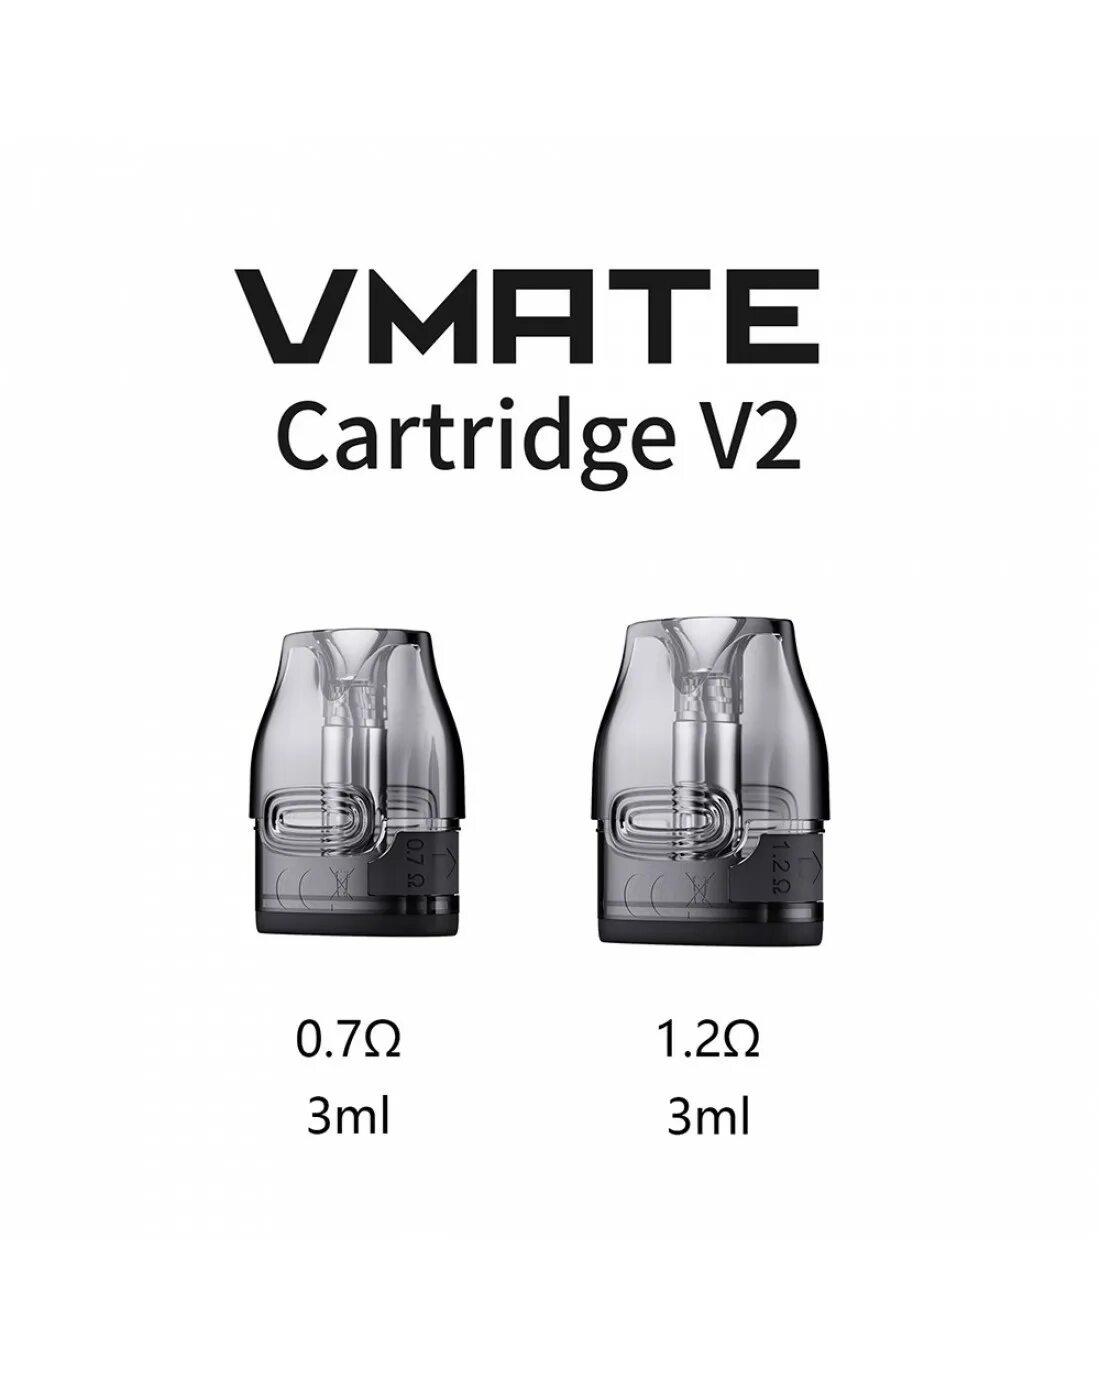 Картридж VOOPOO VMATE v2 0.7ohm. VMATE v2 1.2 ohm картридж. Картридж VOOPOO VMATE v2 (VMATE/VMATE E/V.thru Pro). Картридж VOOPOO VMATE 0.7. Voopoo thru картридж купить